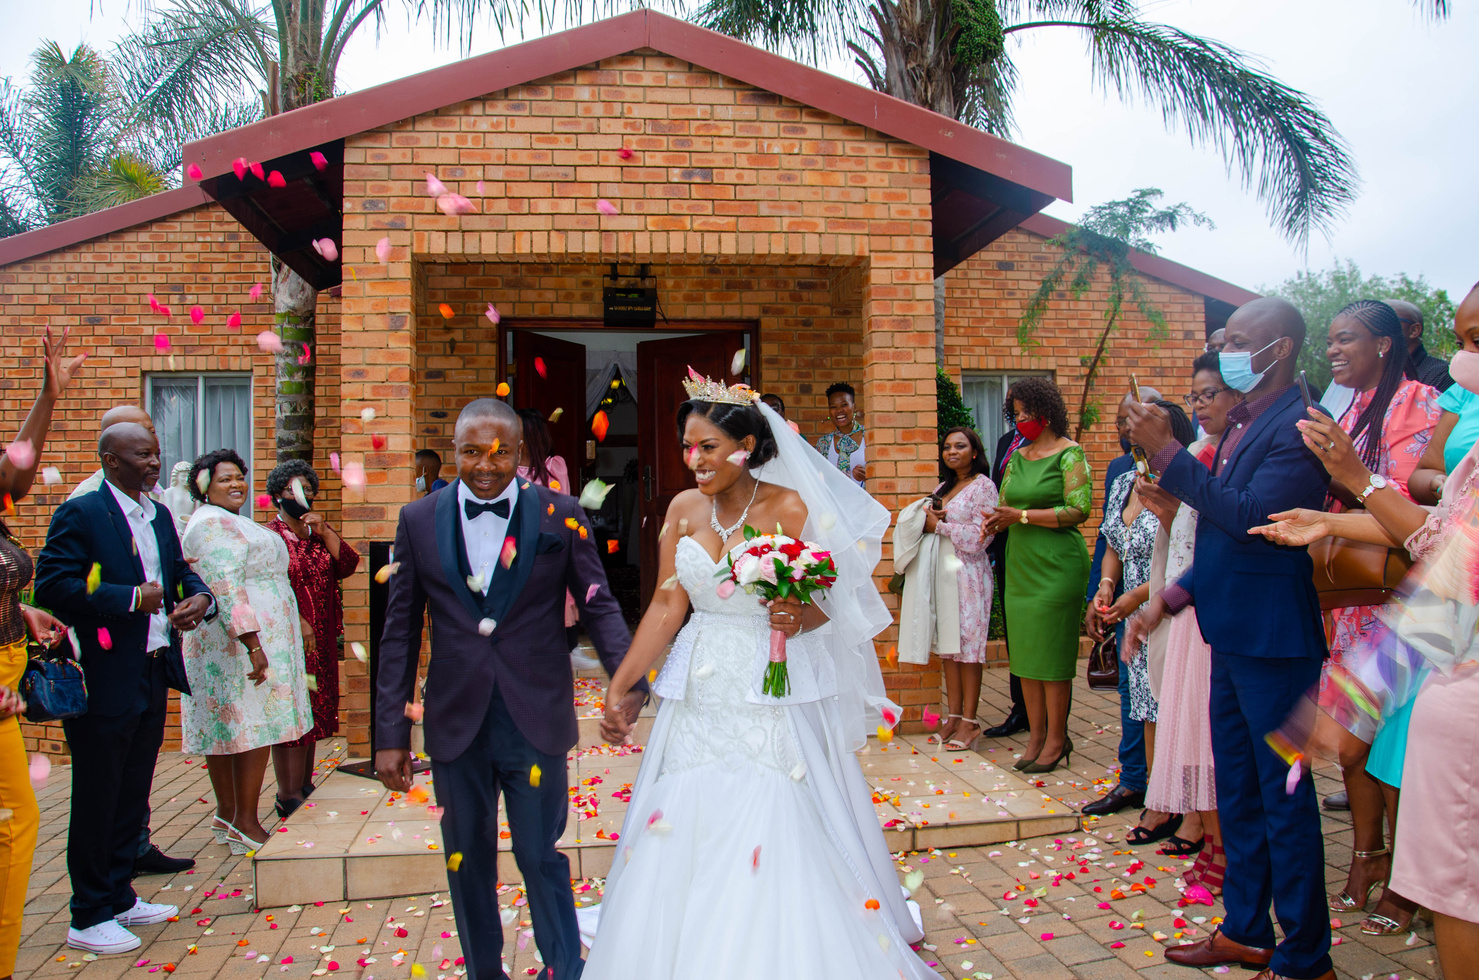 Happy black newlywed couple at wedding among guests